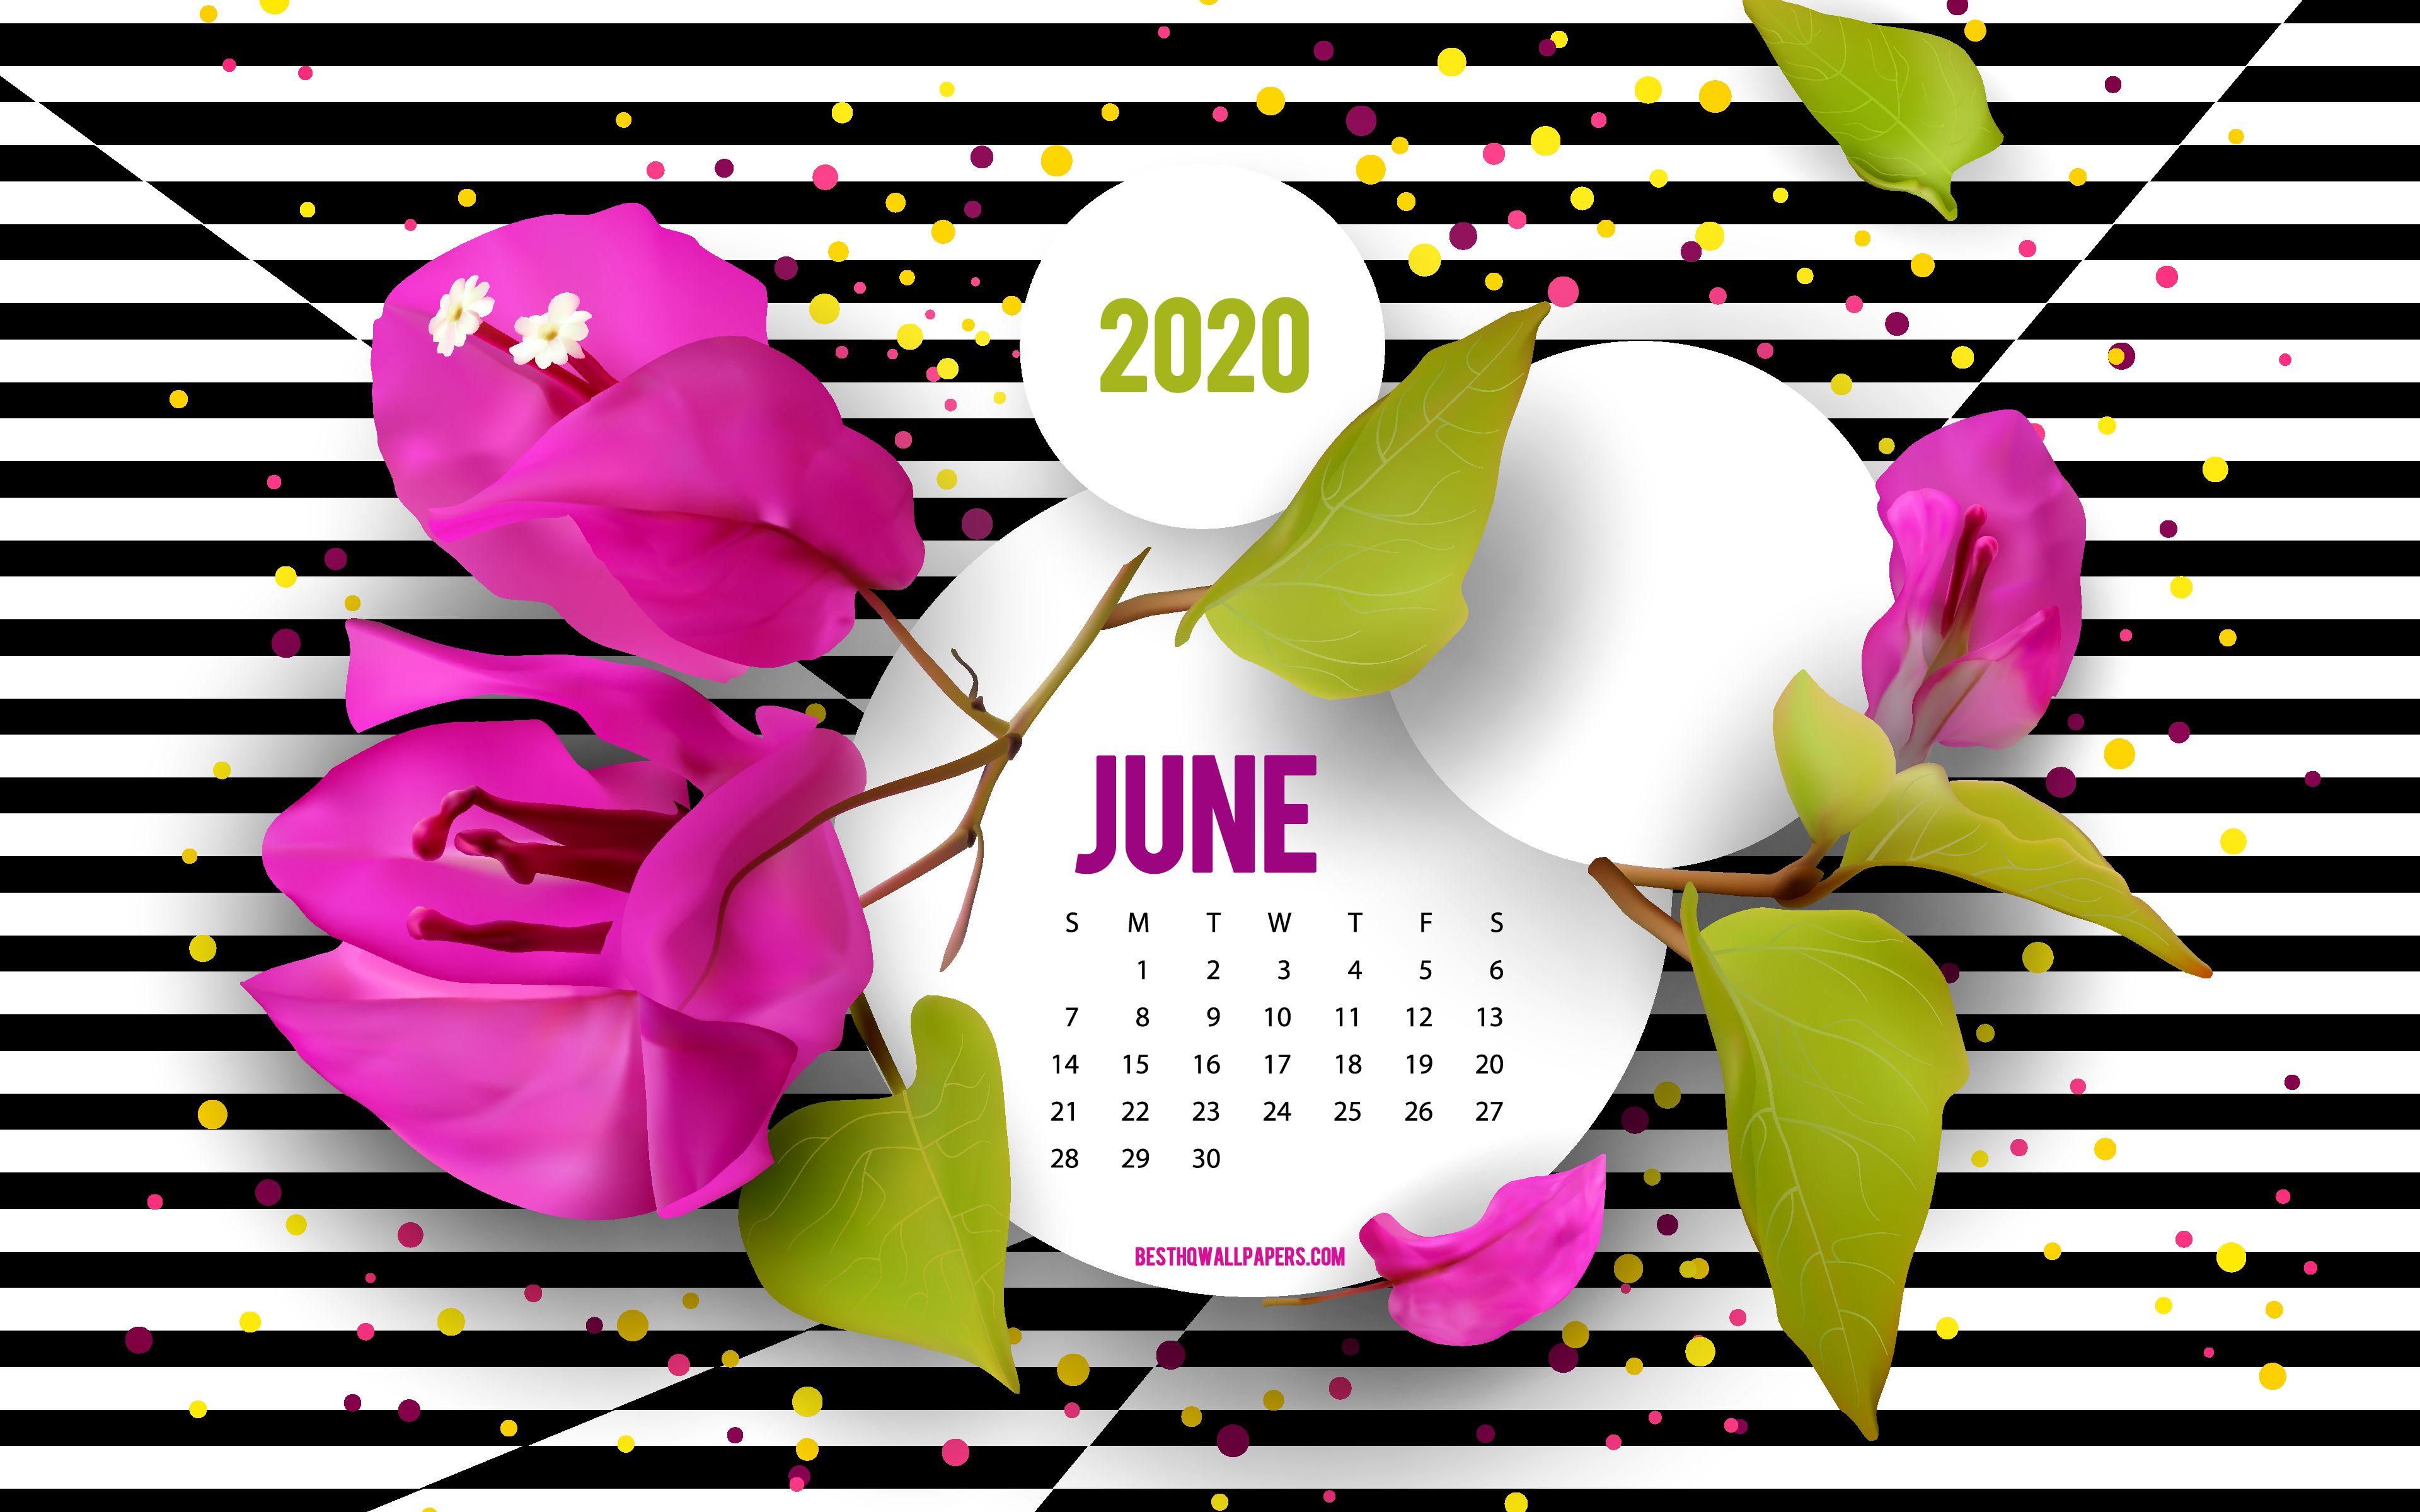 Download wallpaper 2020 June Calendar, background with flowers